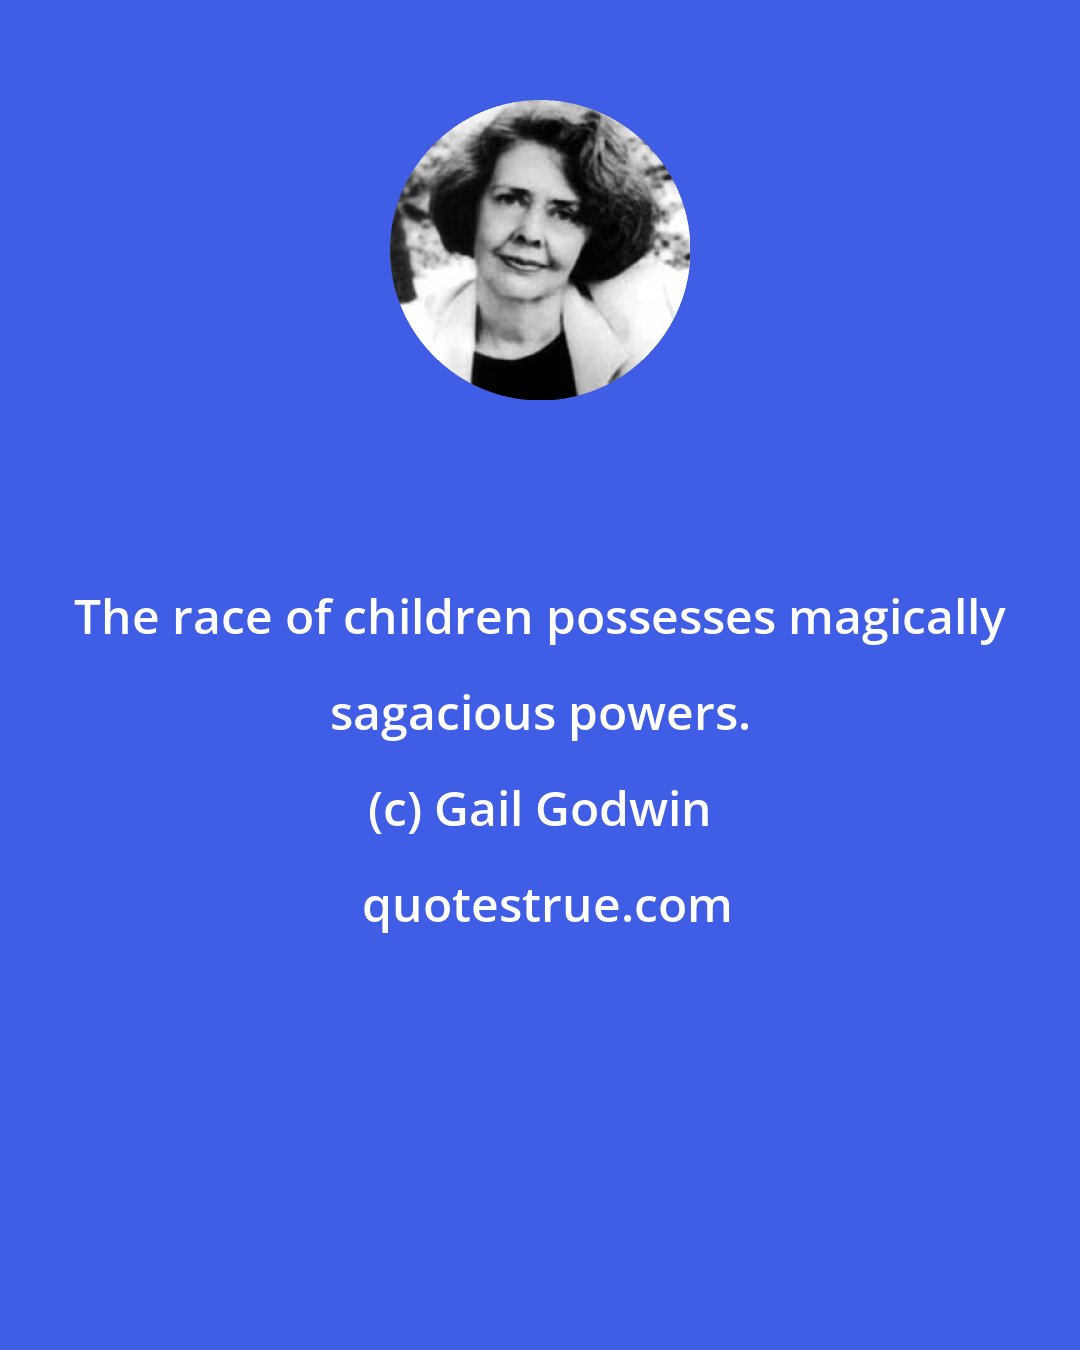 Gail Godwin: The race of children possesses magically sagacious powers.